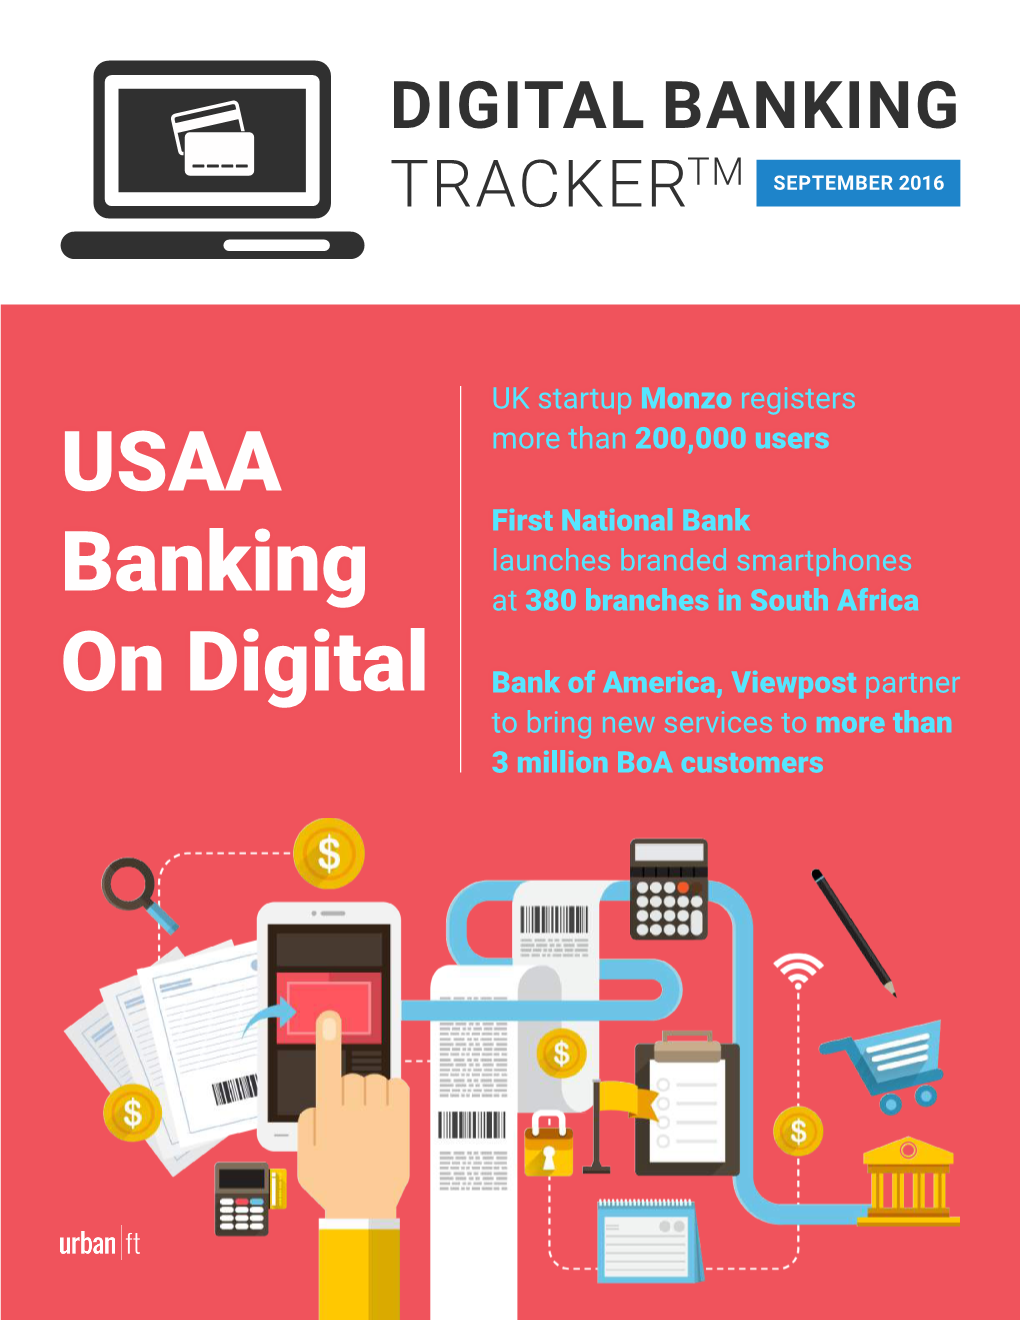 USAA Banking on Digital